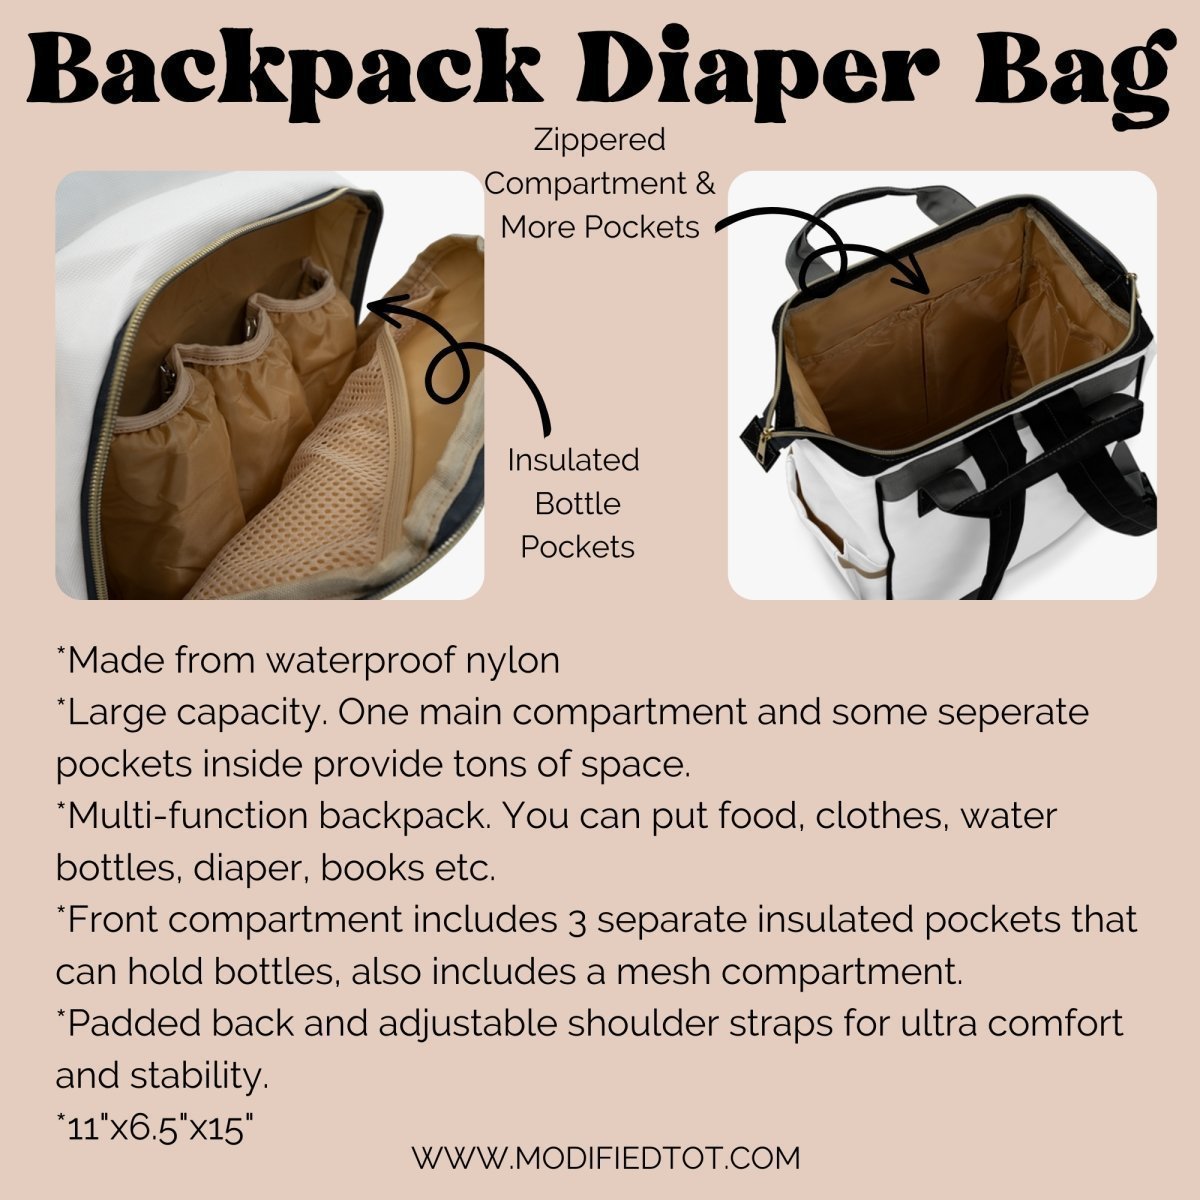 Happy Camper Personalized Backpack Diaper Bag - gender_boy, Happy Camper, text